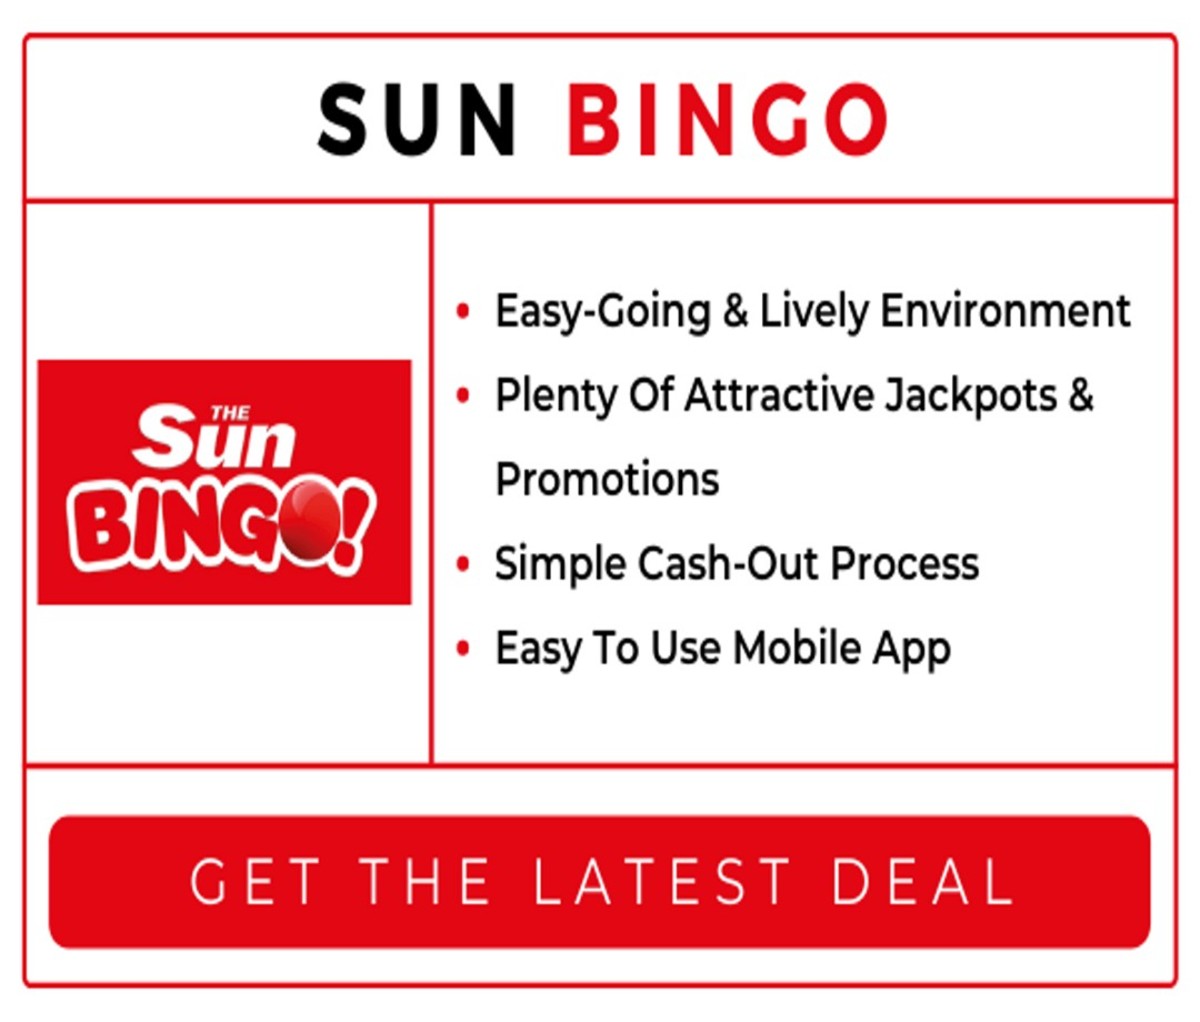 Sun Bingo - Biggest Bonuses On Online Bingo Games